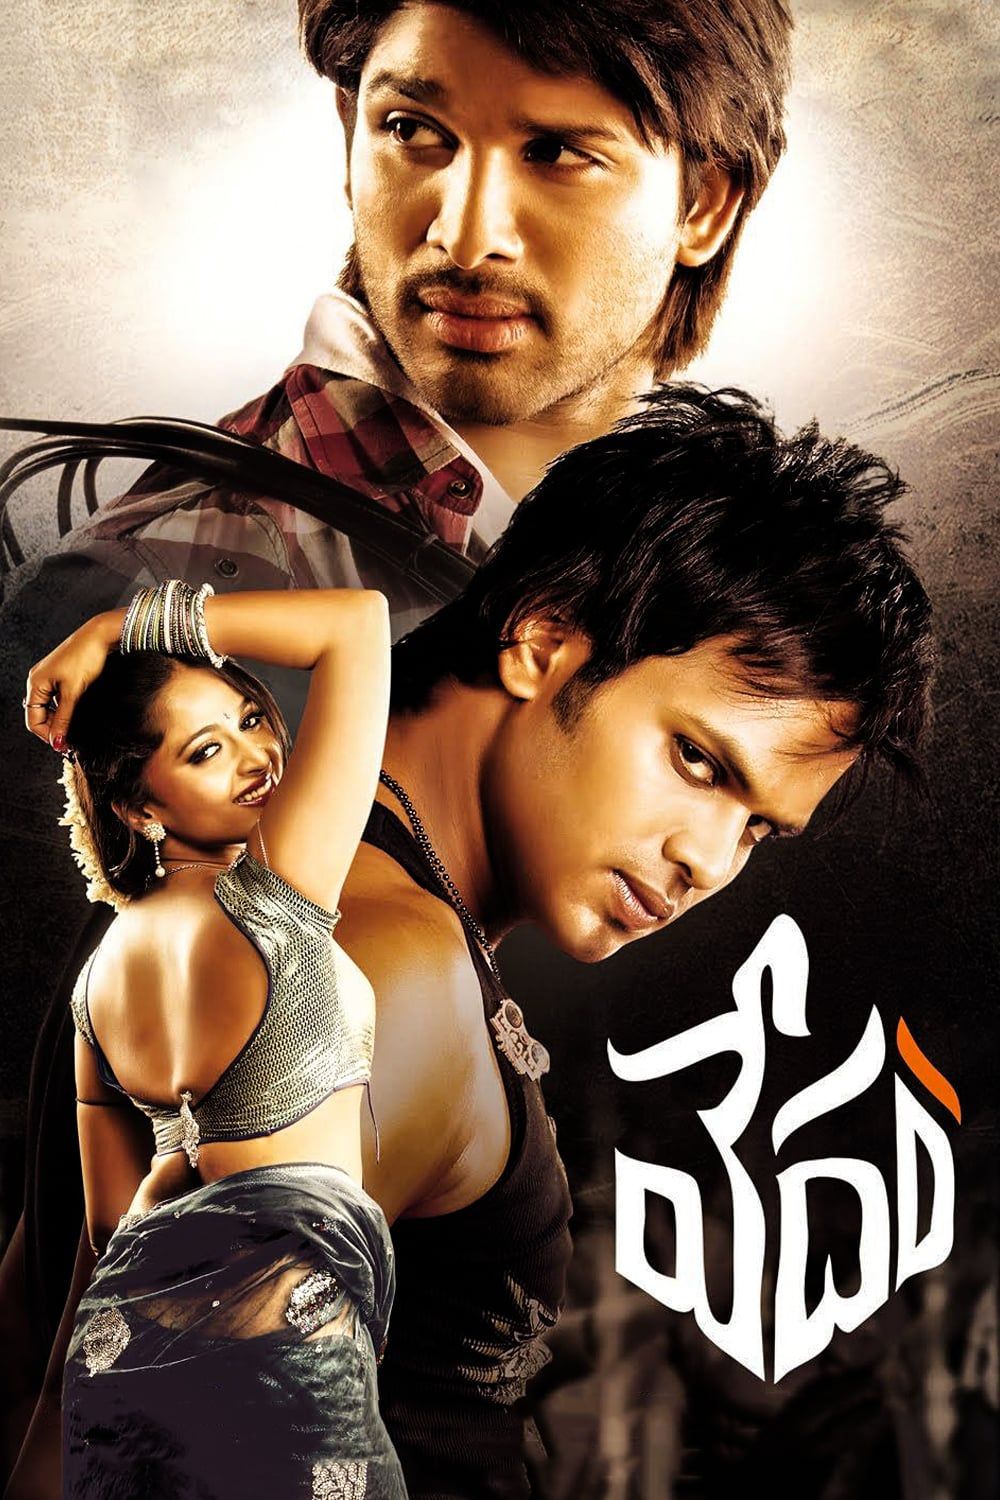 Vedam (2010) Hindi Dubbed Full Movie